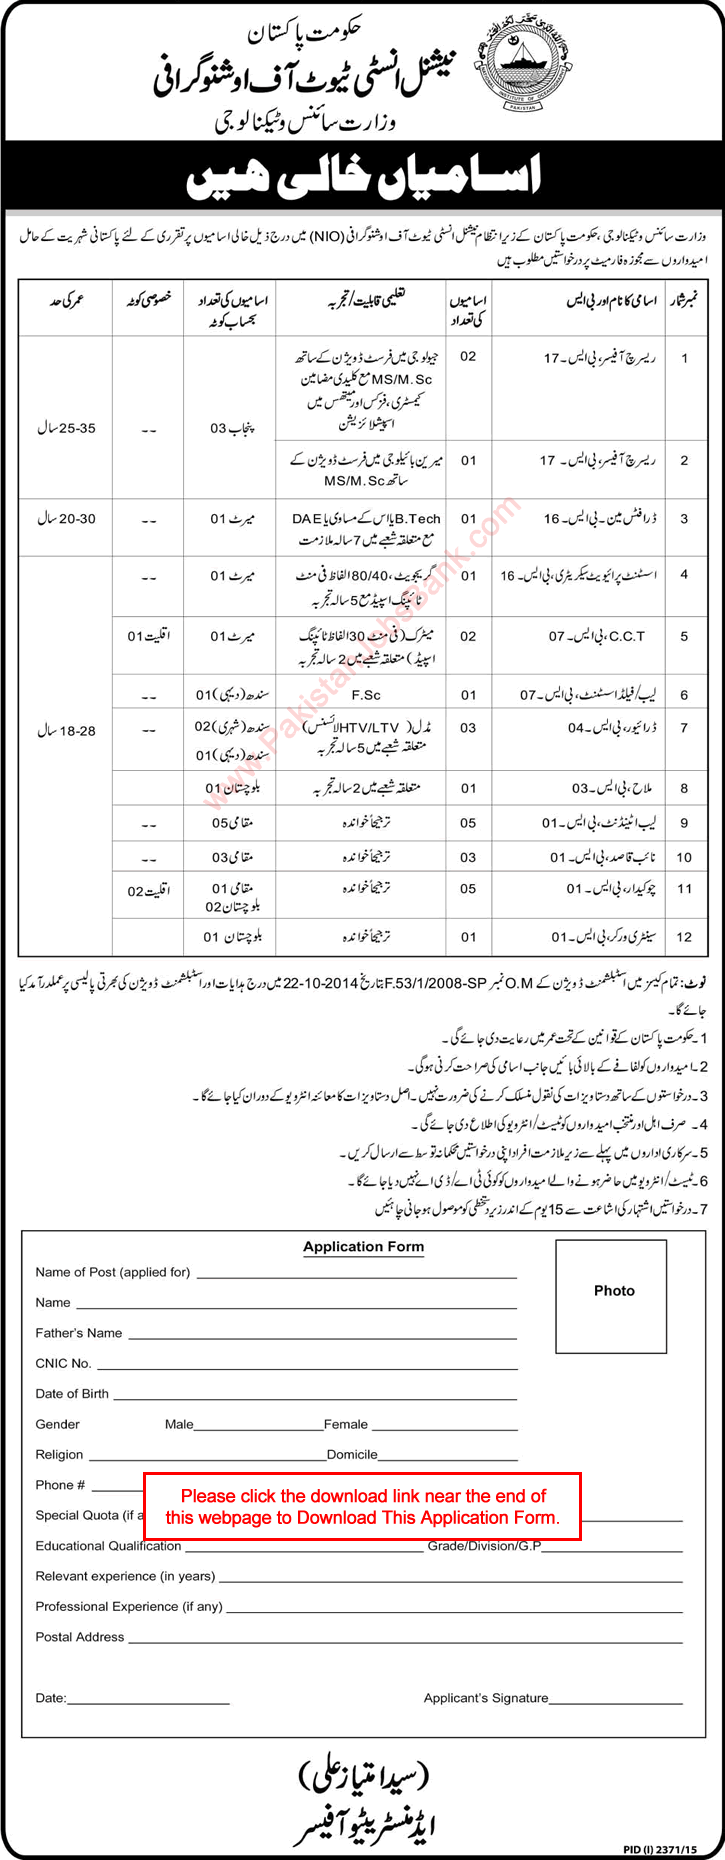 National Institute of Oceanography Karachi Jobs 2015 November NIO Application Form Download Latest